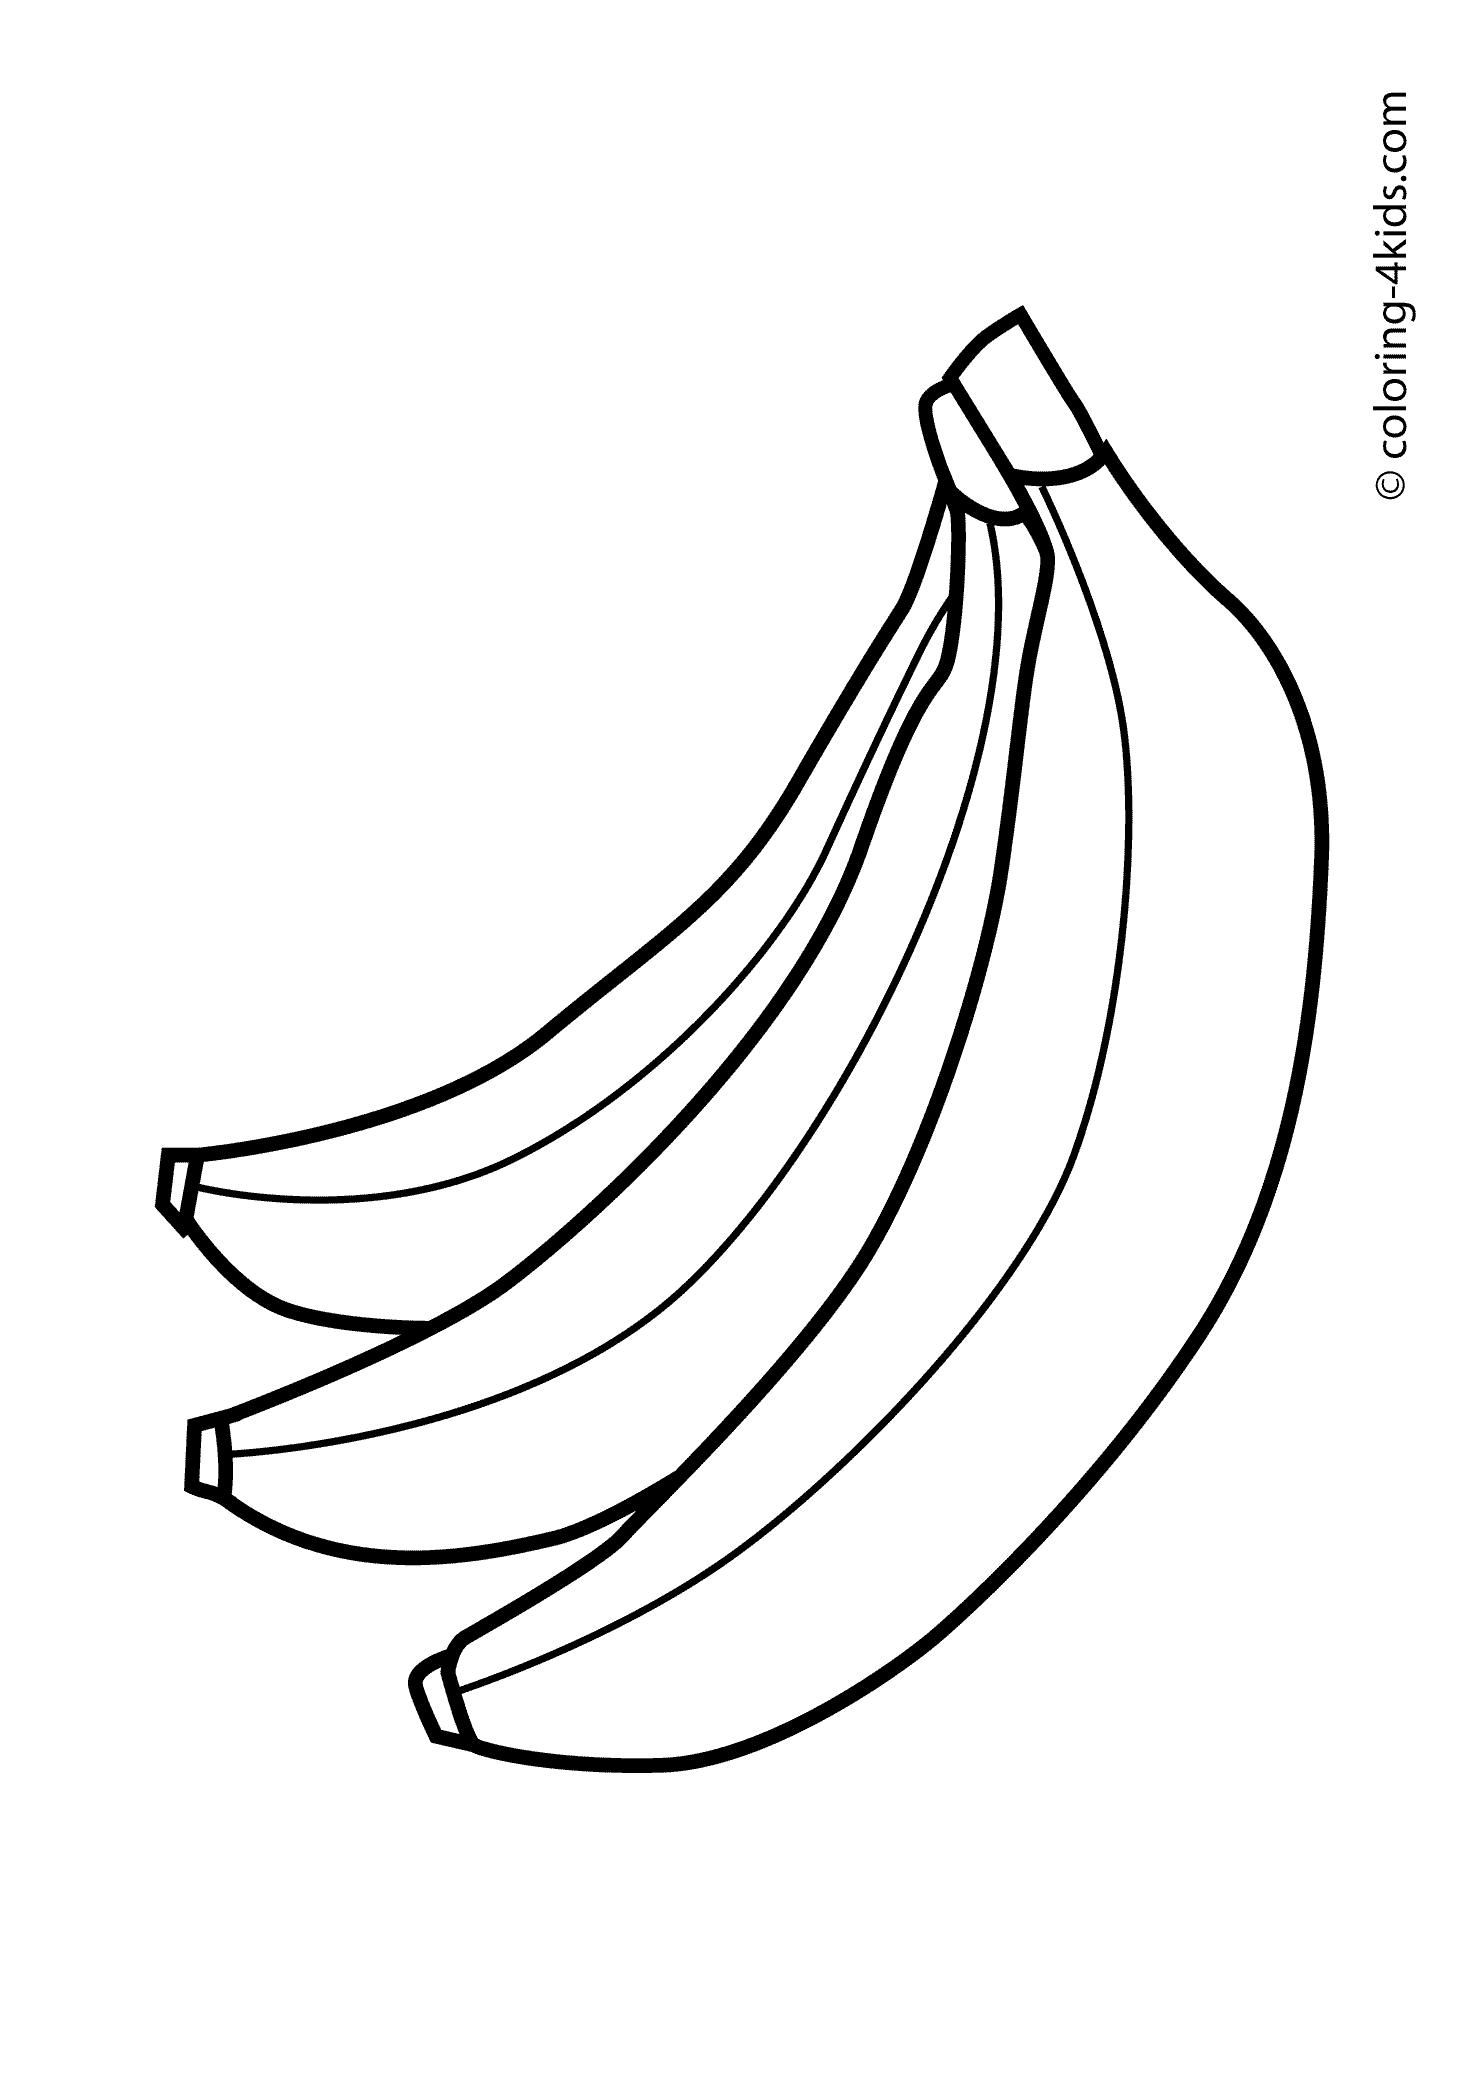 Bananas clipart 2 banana. Fruits coloring pages for